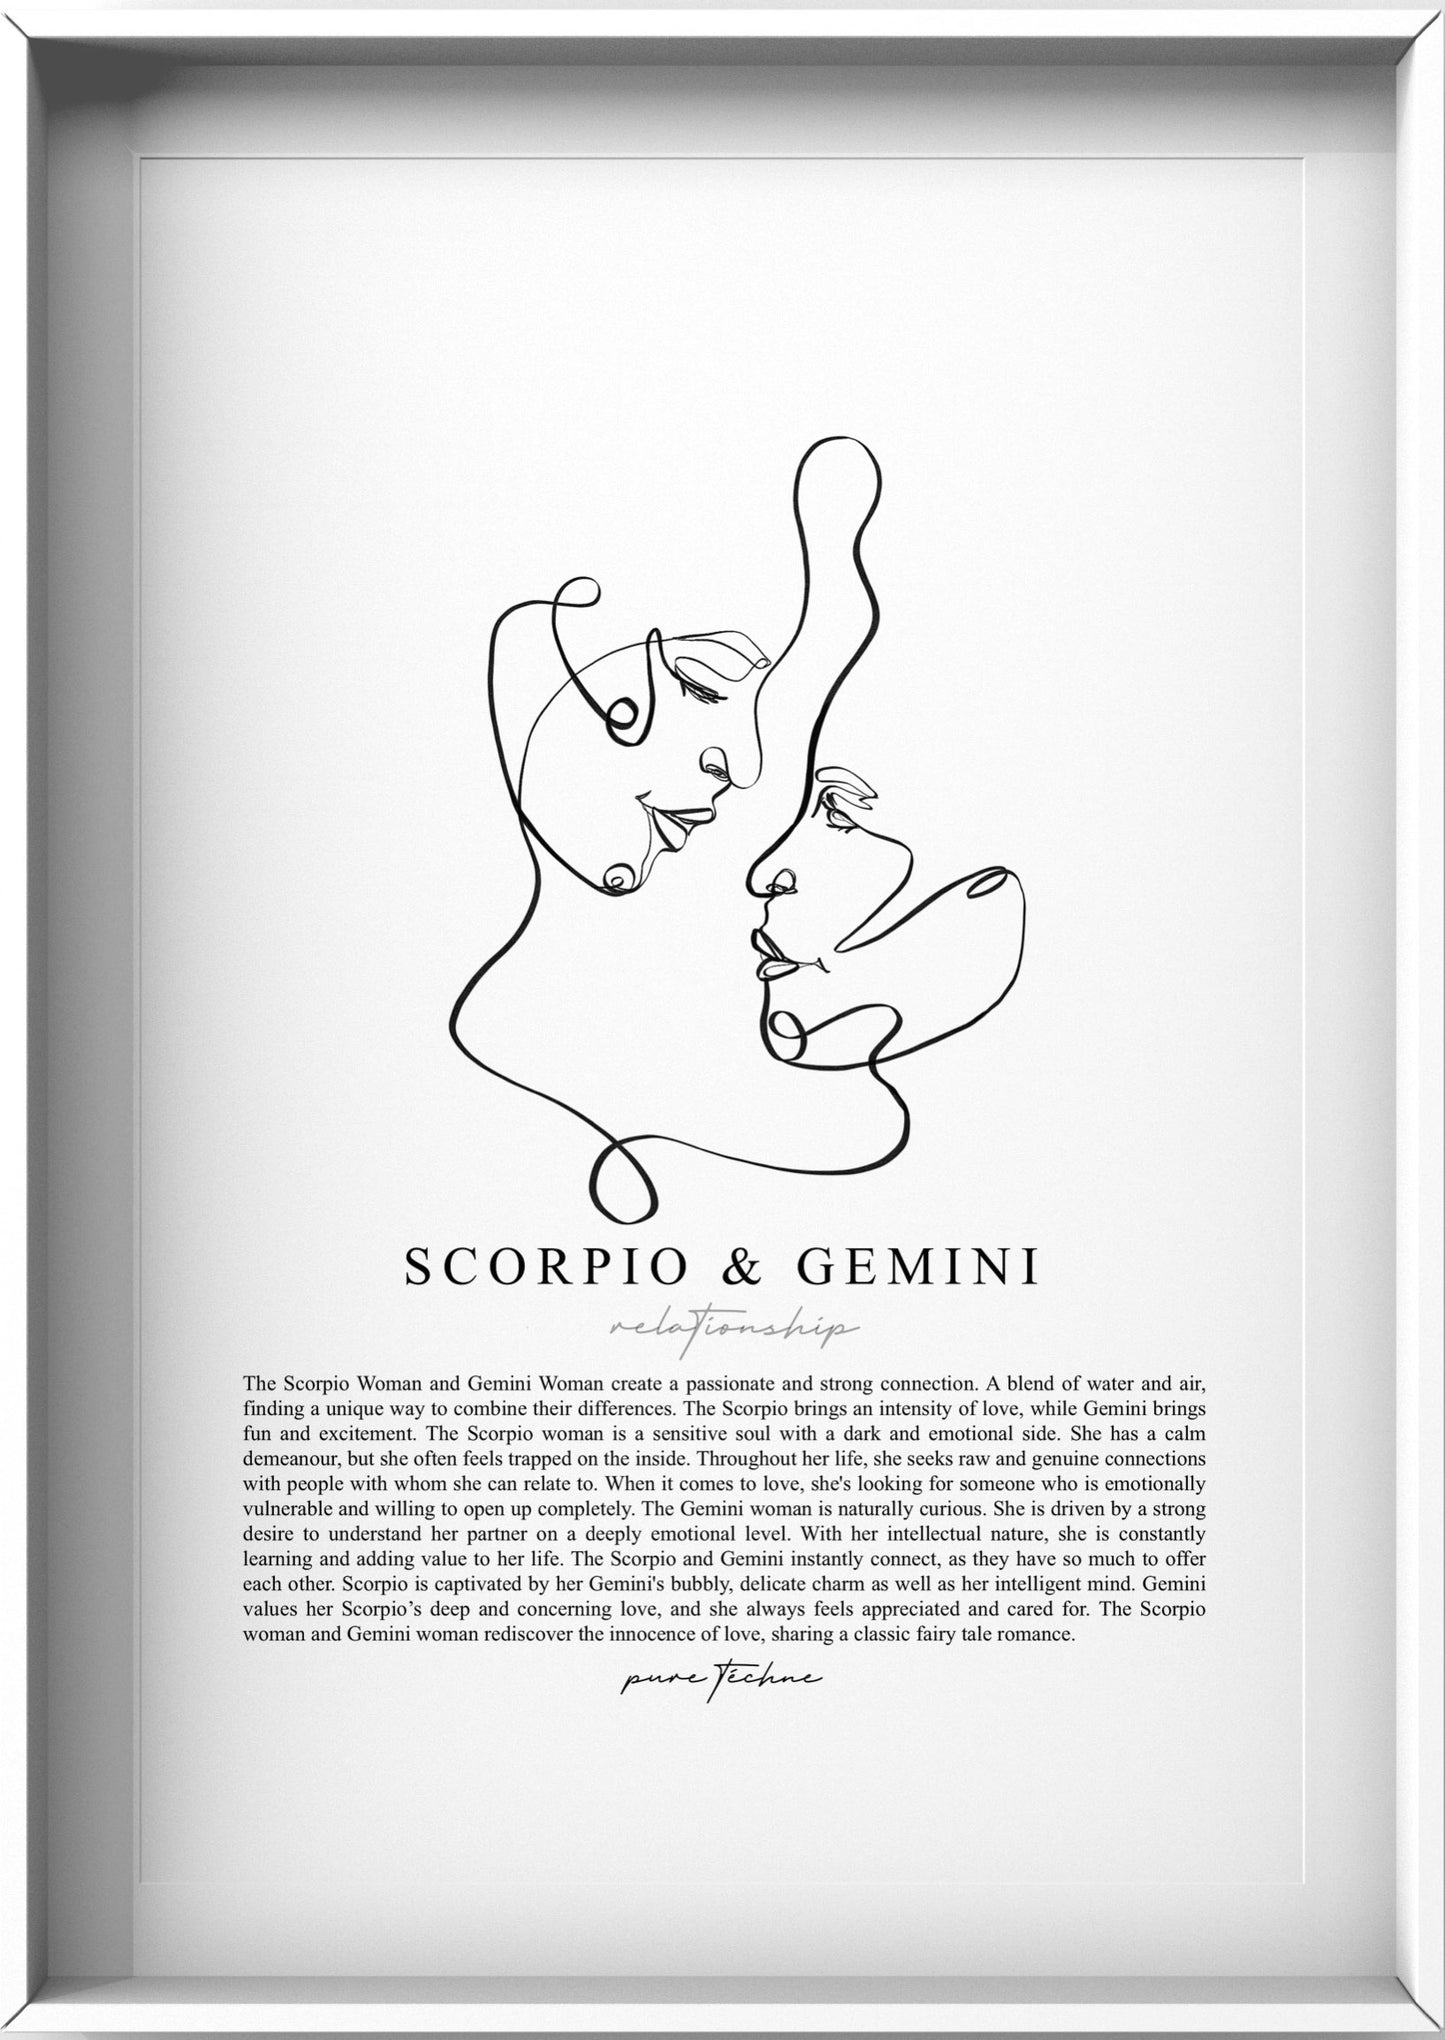 Scorpio Woman & Gemini Woman